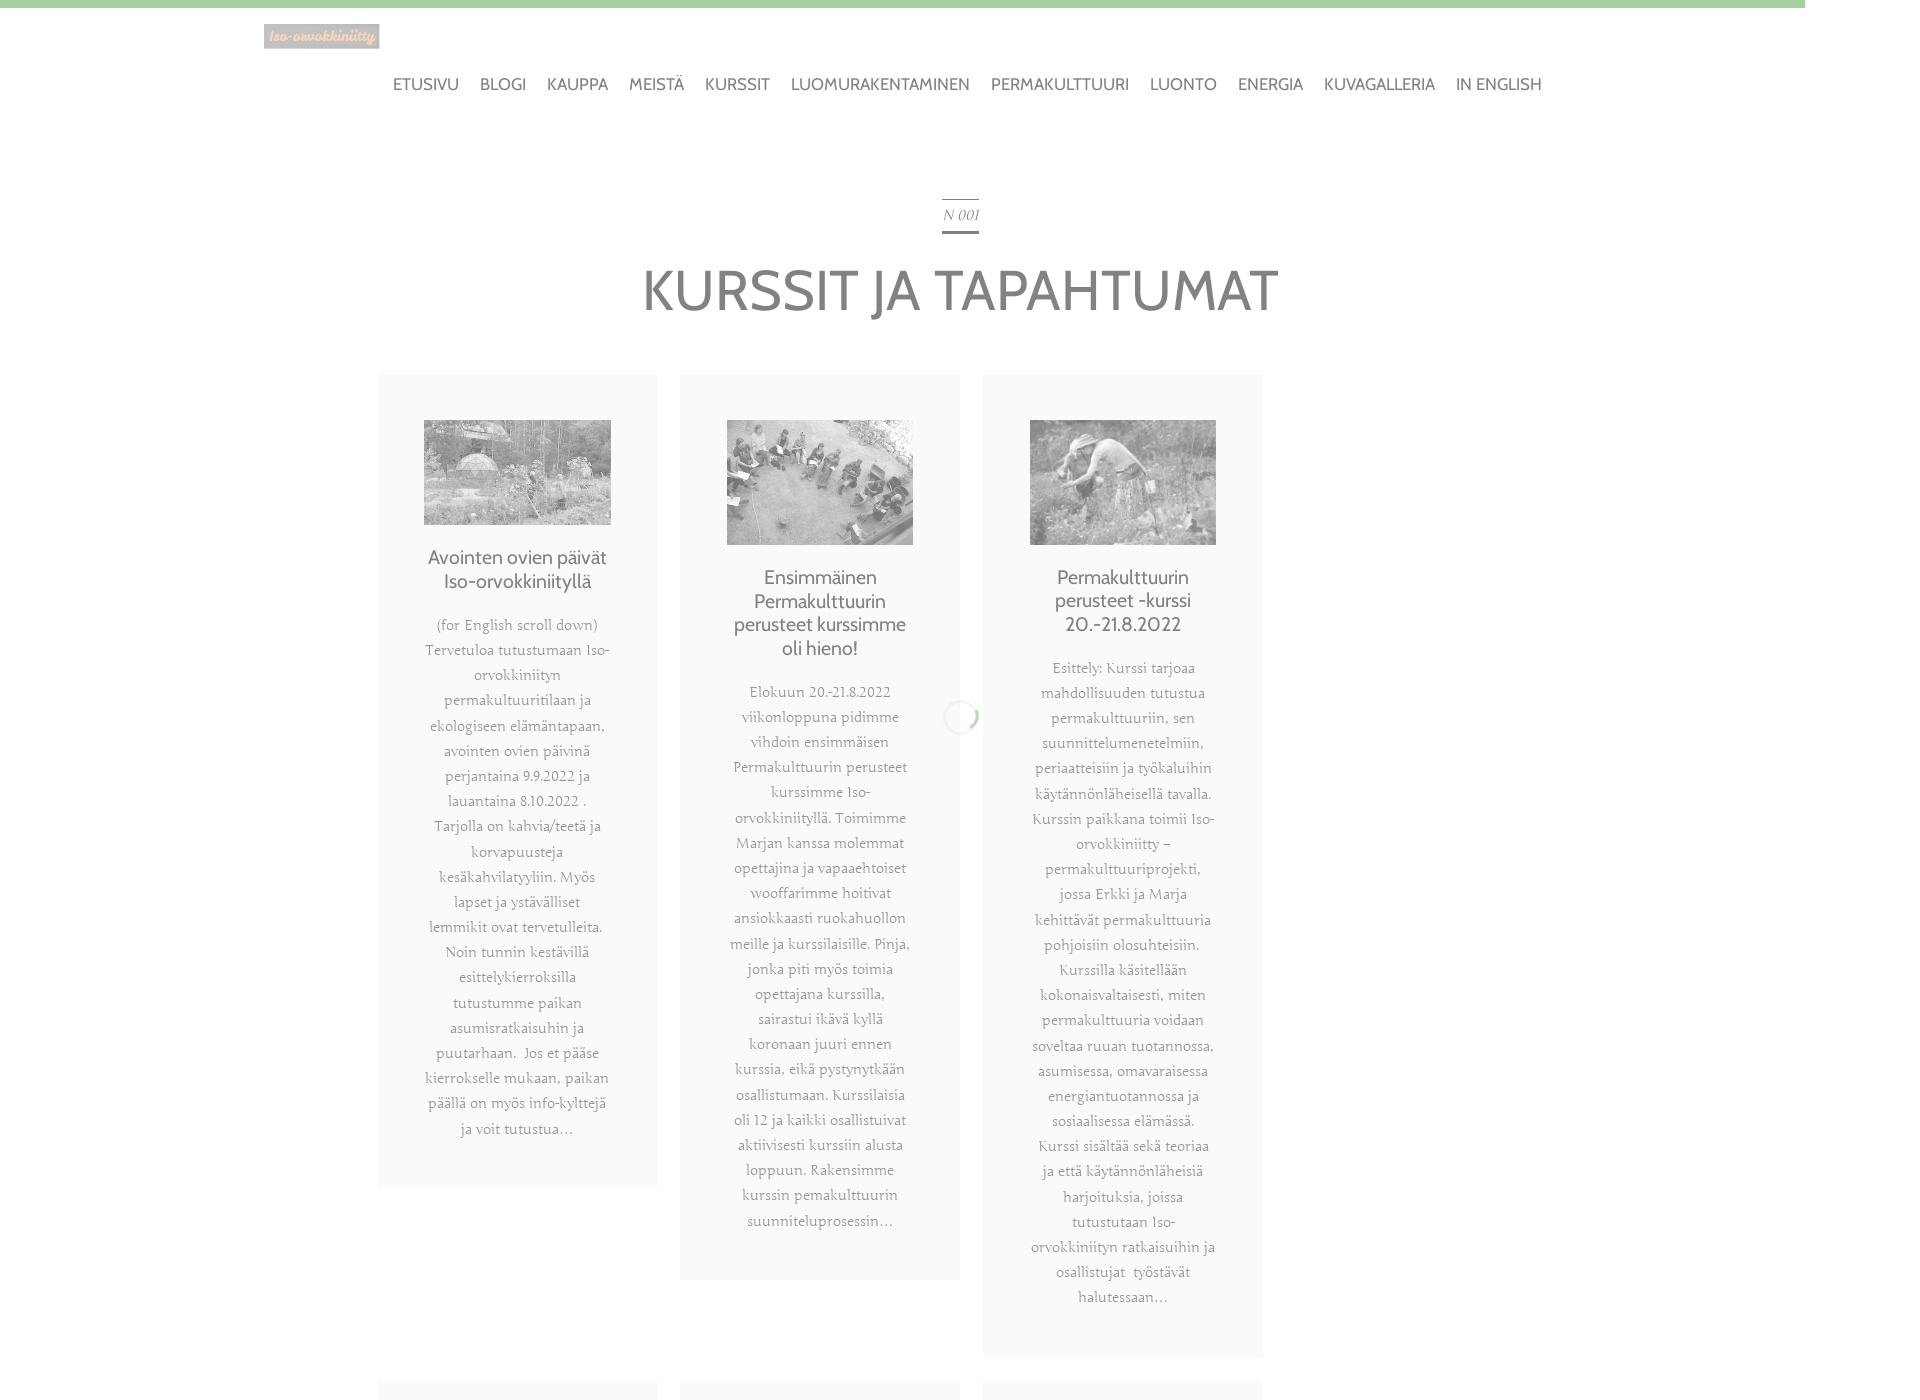 Skärmdump för iso-orvokkiniitty.fi